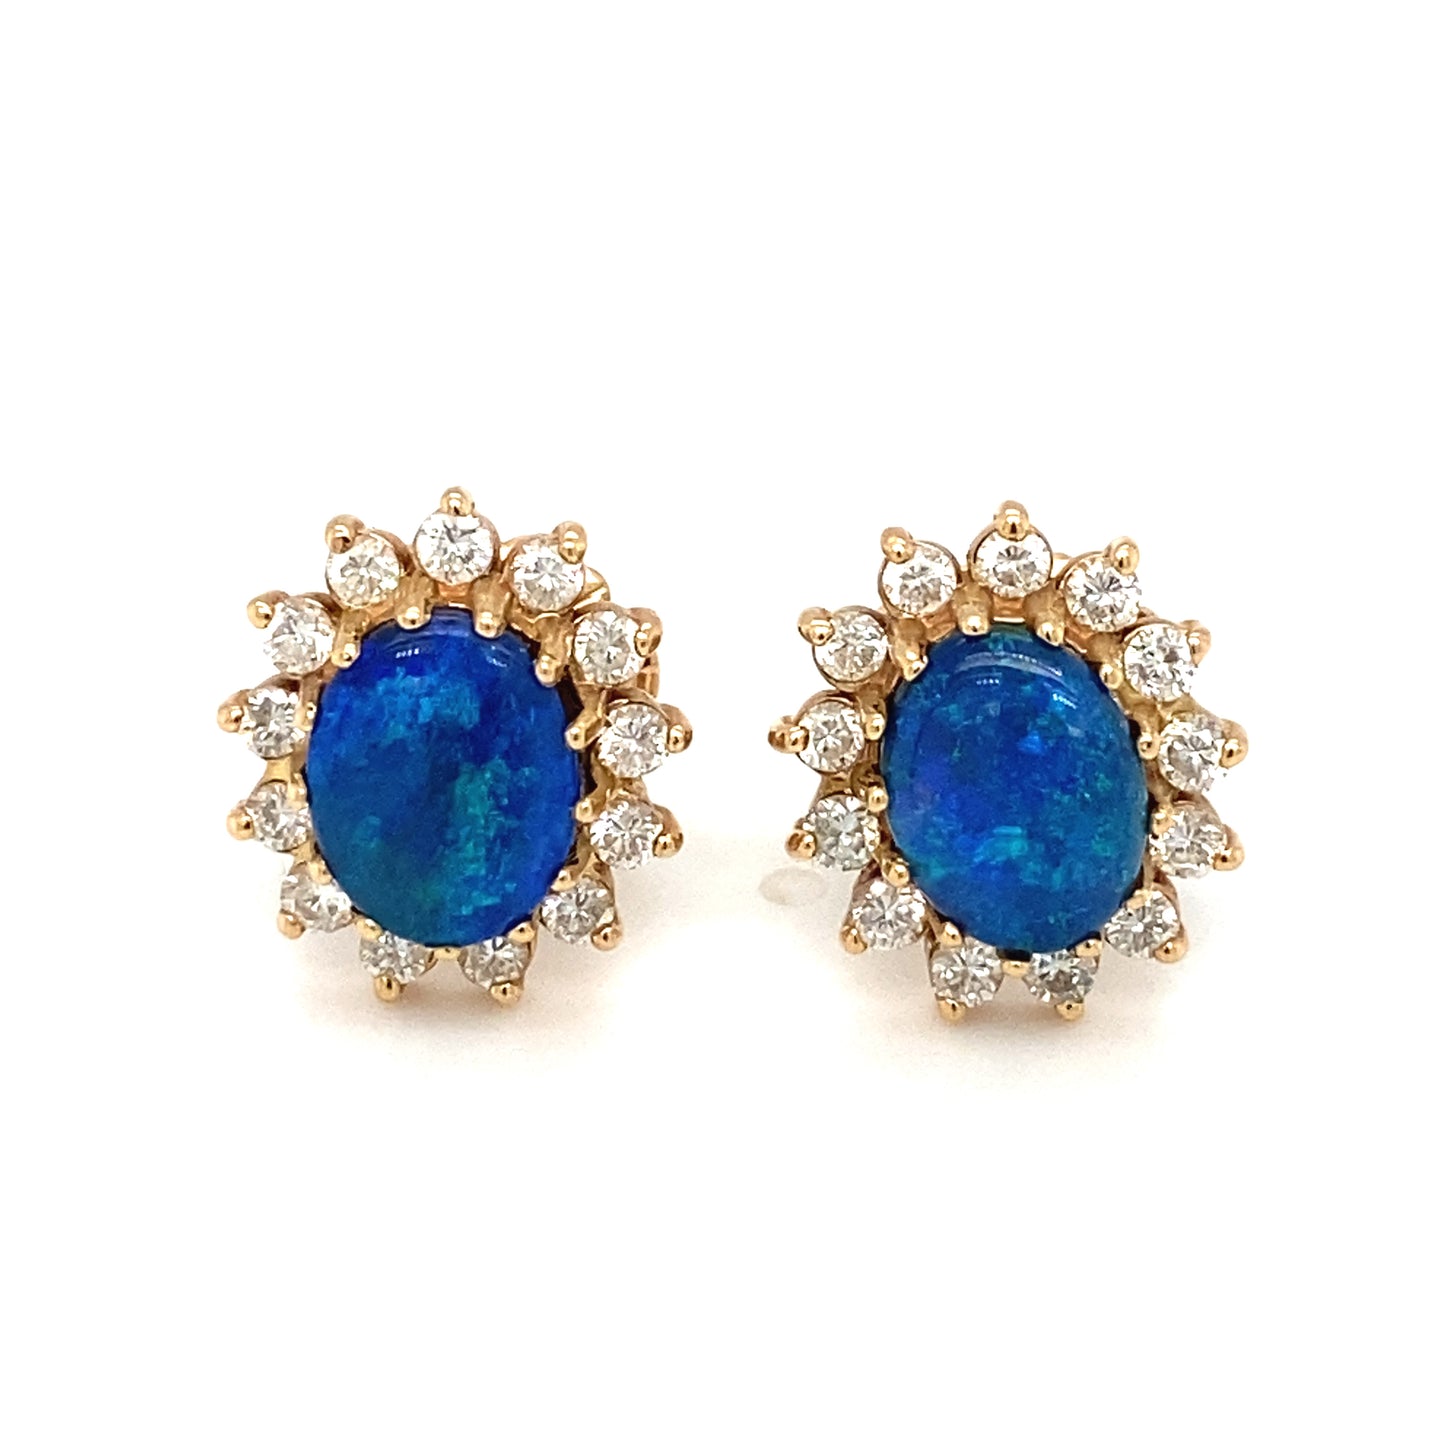 Circa 2000s Opal Doublet Stud Earrings with Diamonds in 14K Gold